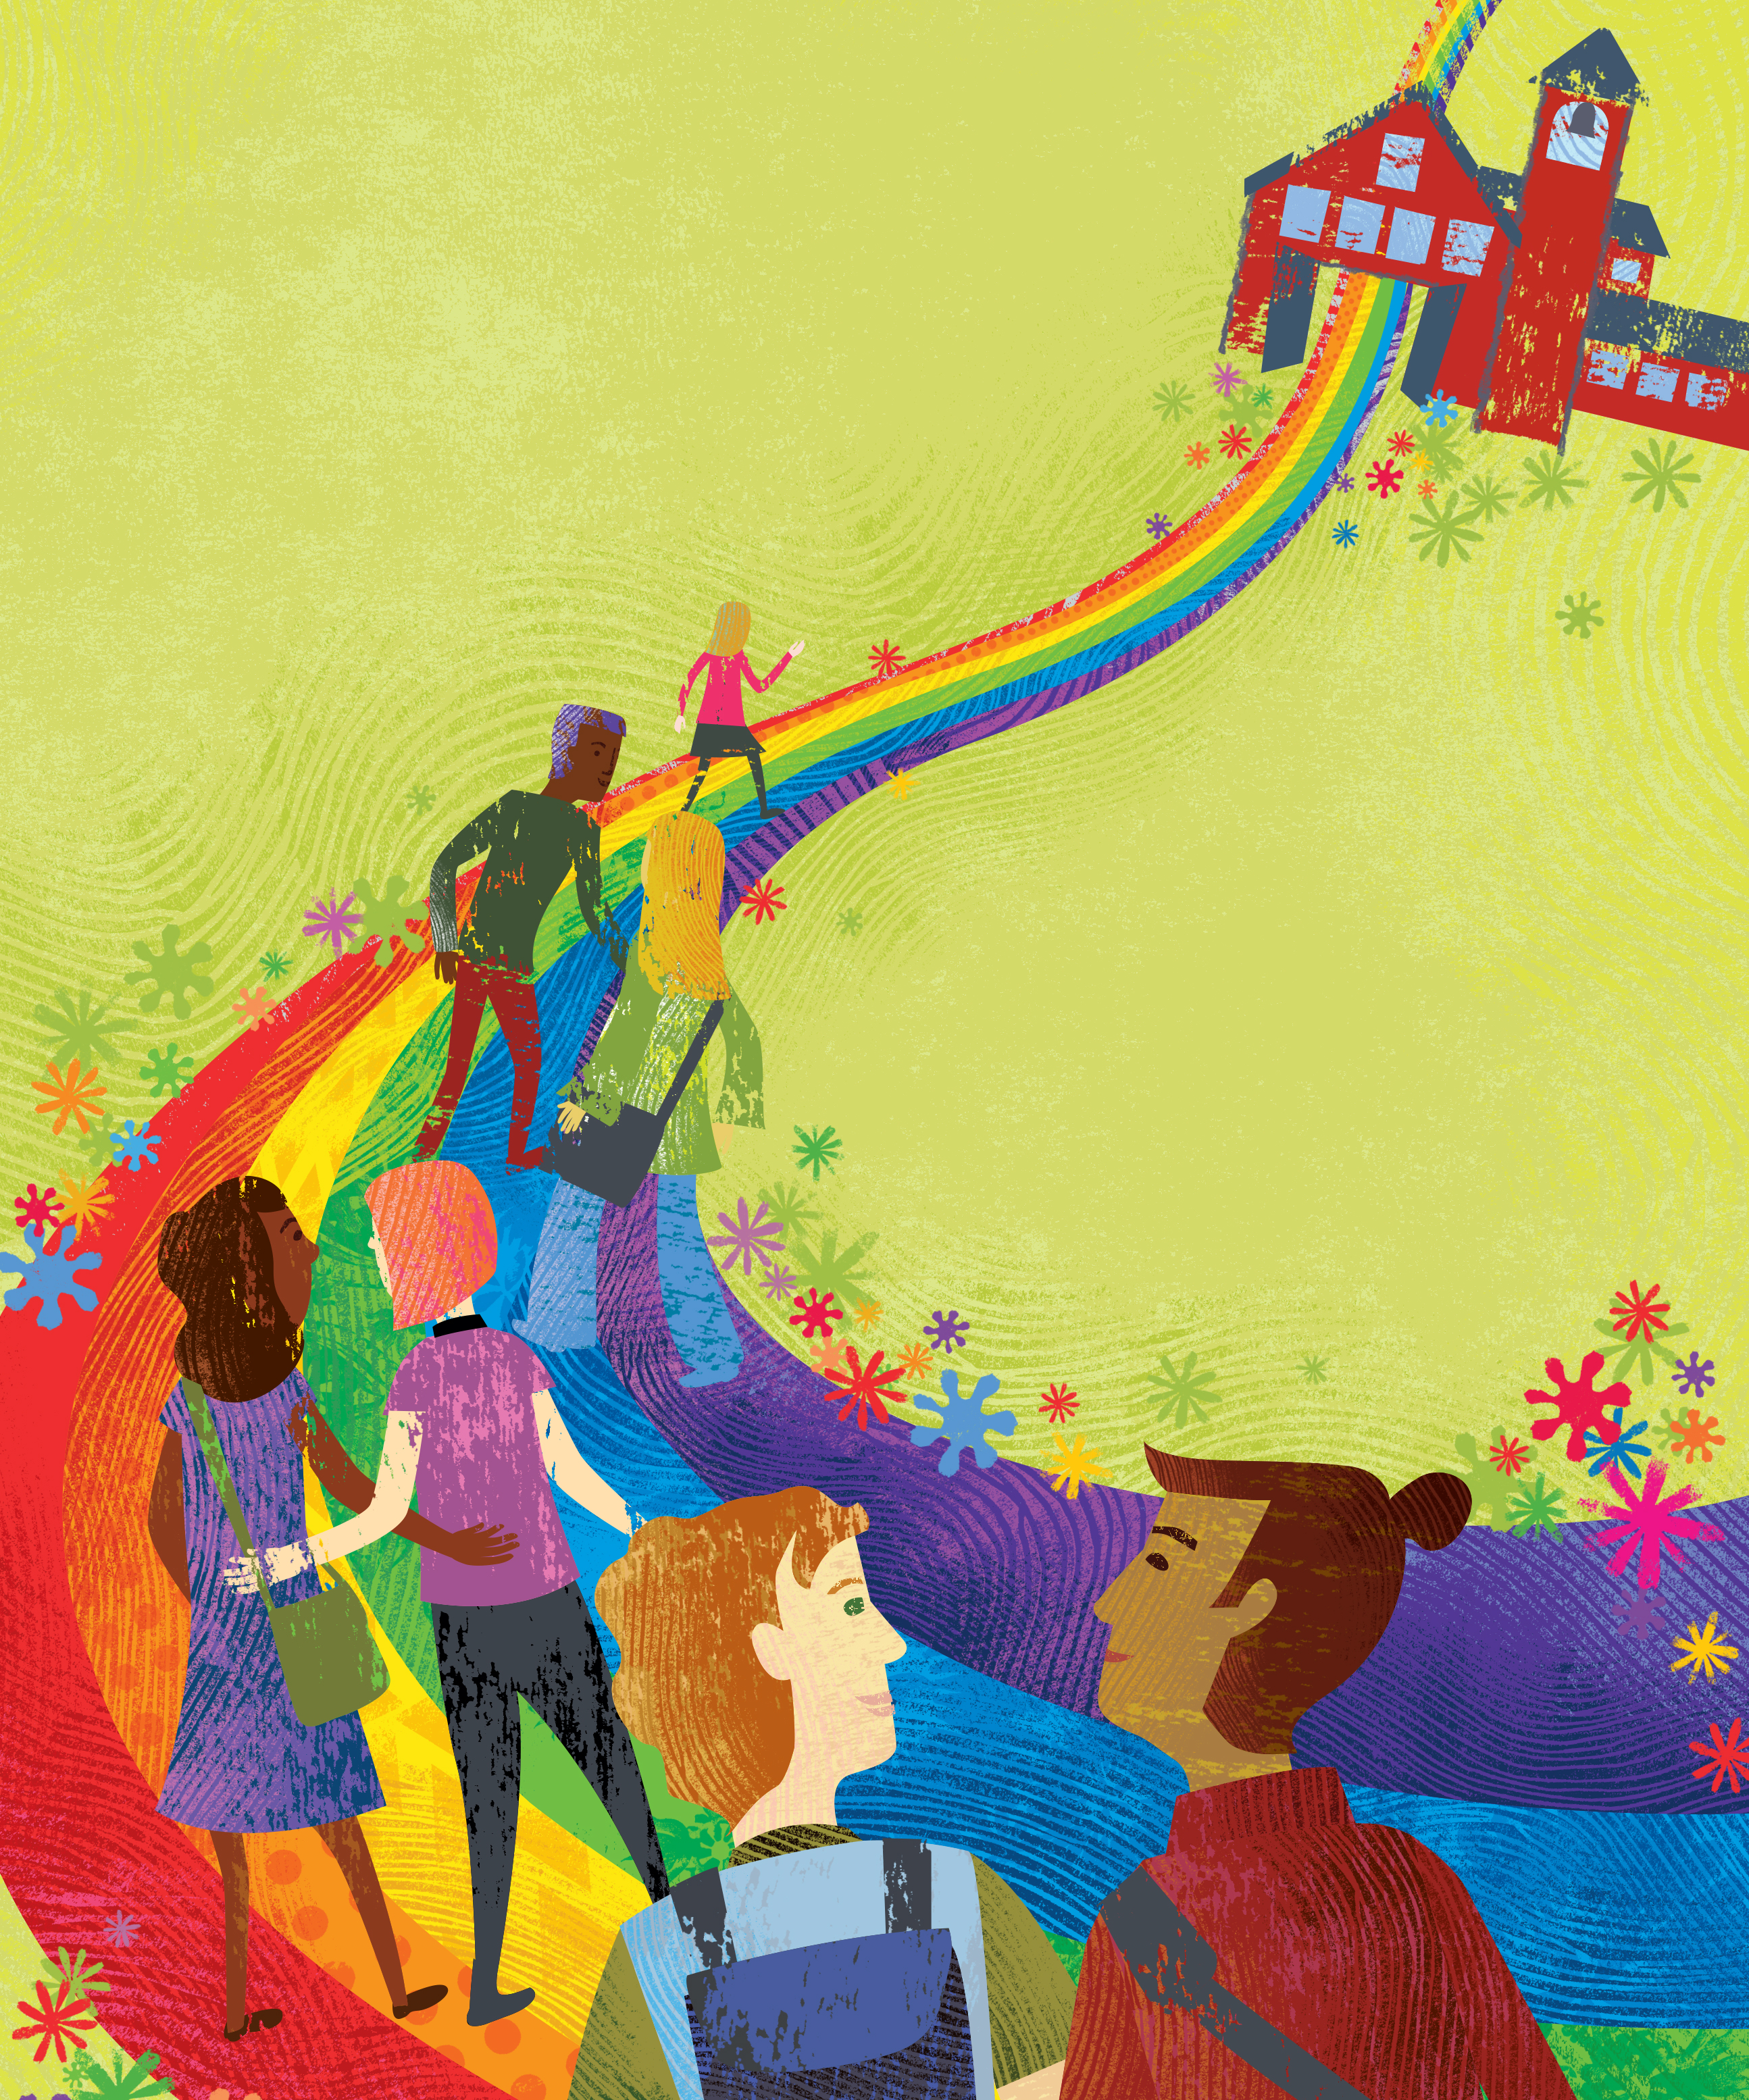 A Wealth of Positive LGBTQ Representation in Children's